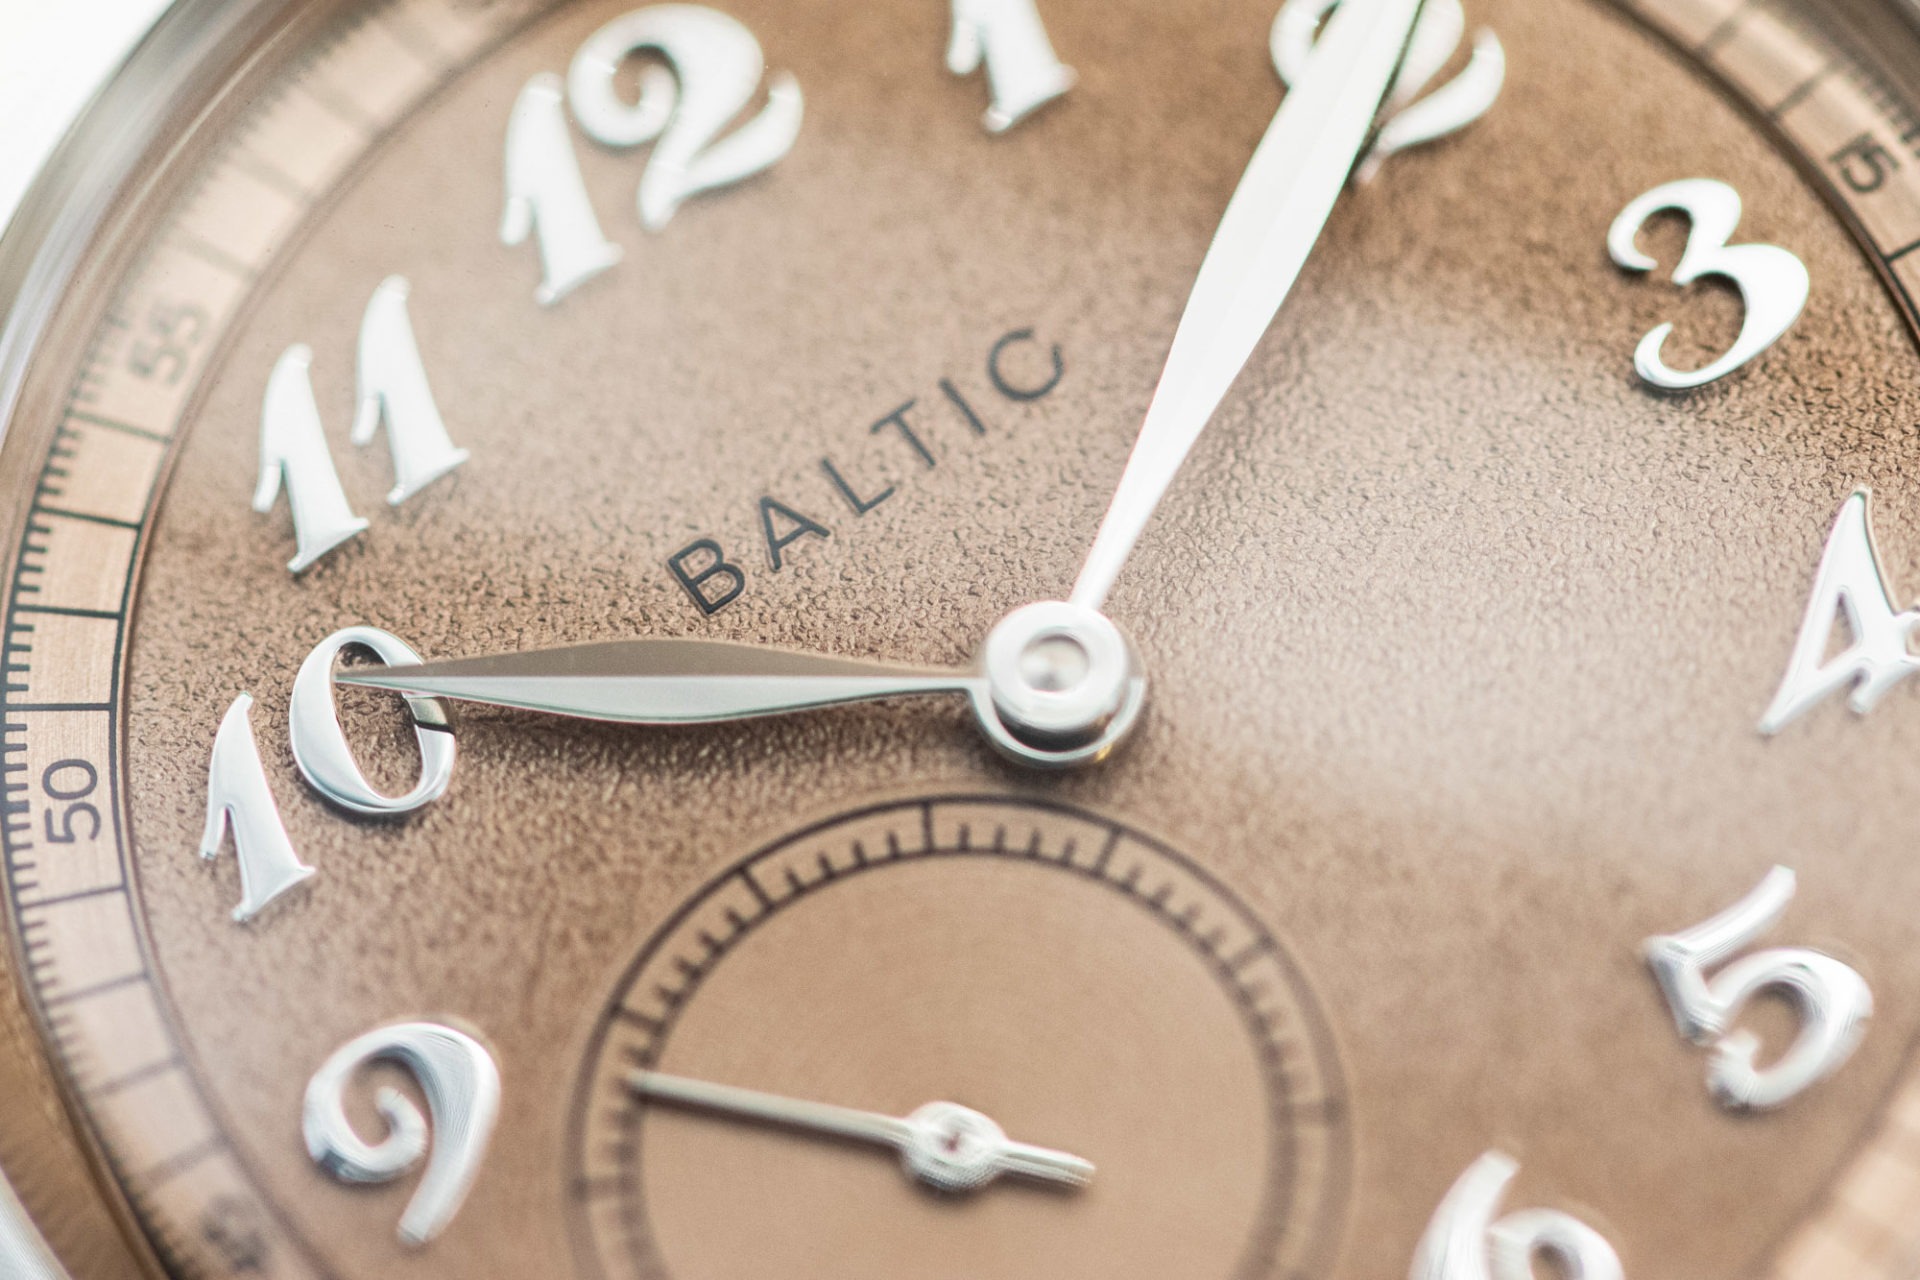 Baltic MR01